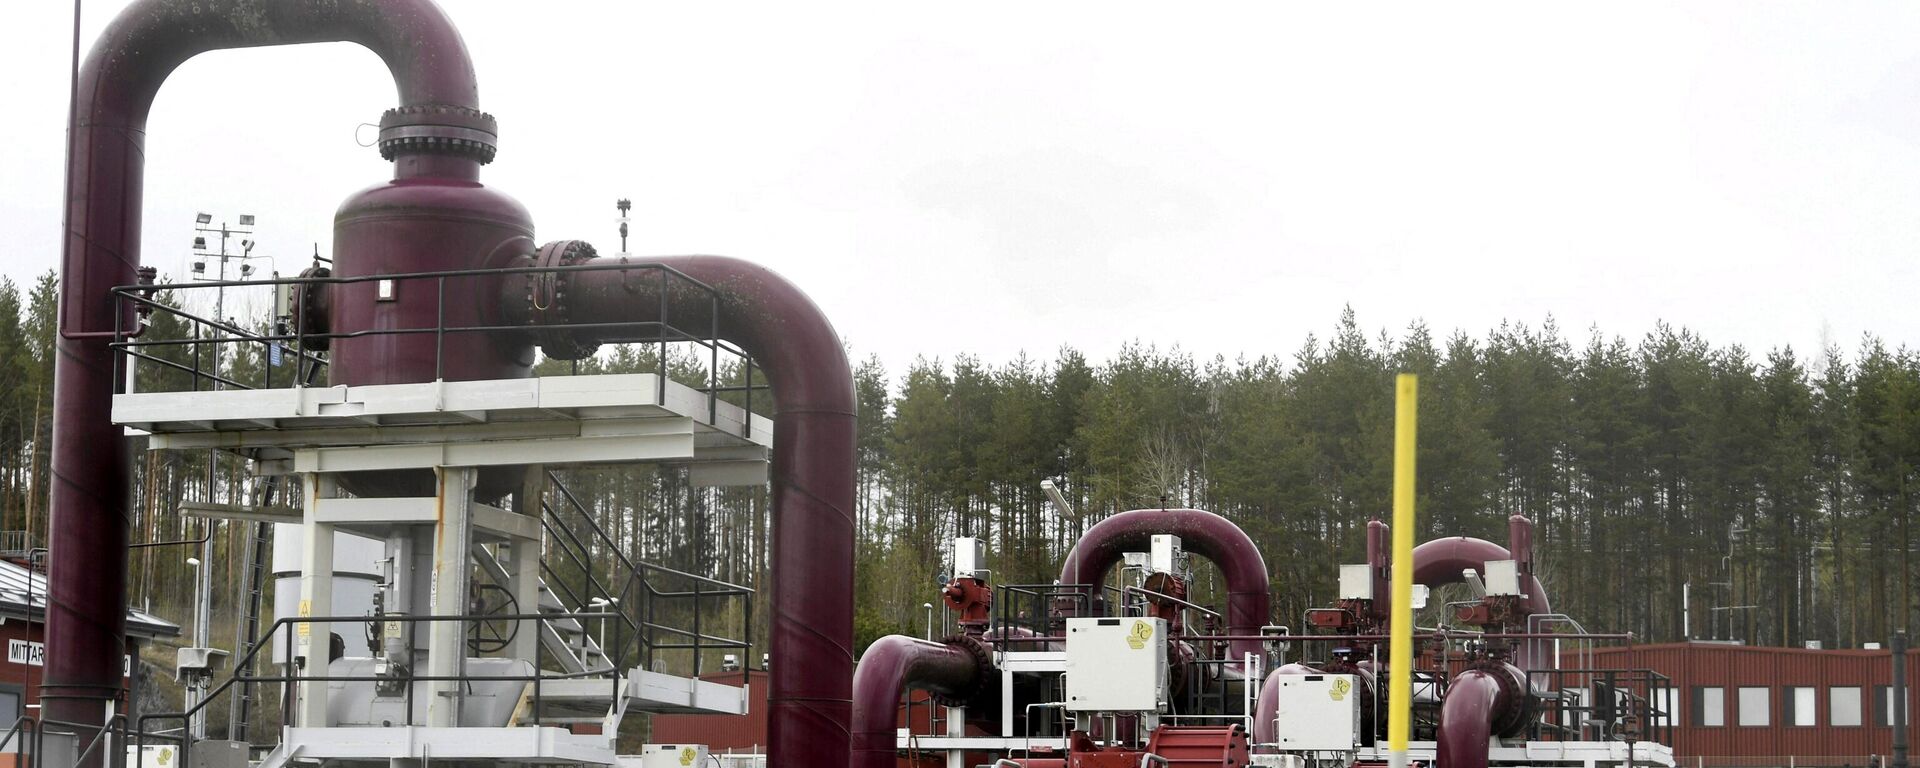 A photo taken on May 12, 2022 shows pipes at the Gasum plant in Raikkola, Imatra, Finland - Sputnik International, 1920, 20.05.2022